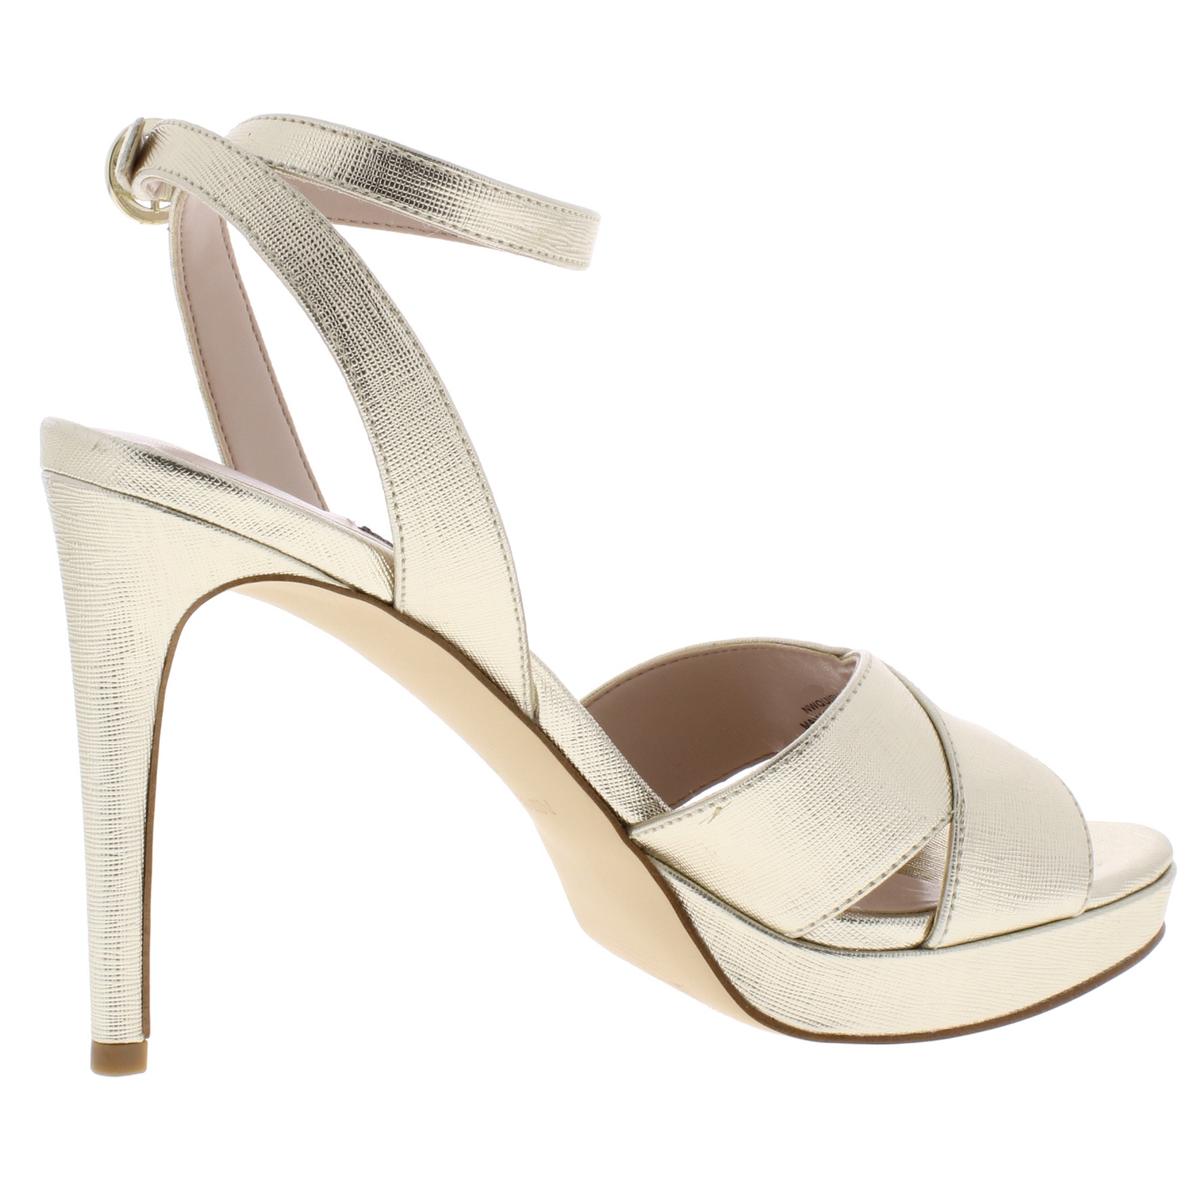 Nine West Womens Gold Metallic Heel Sandals Shoes 9.5 Medium (B,M) BHFO ...